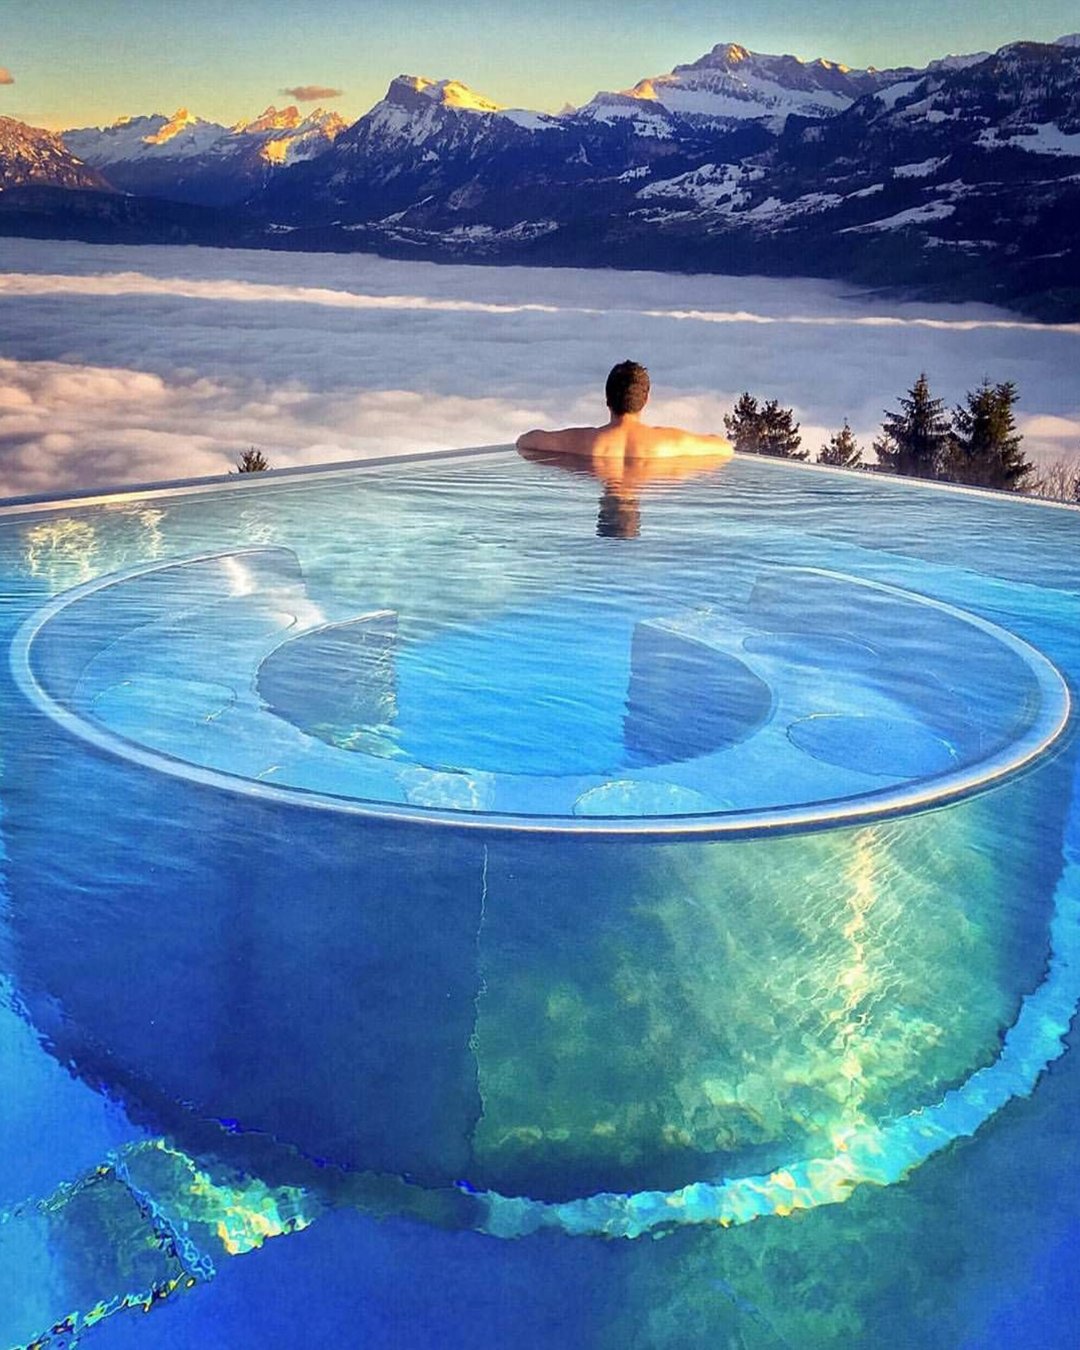 best honeymoon resorts villa honegg ennetbürgen mountain view man in pool villahonegg